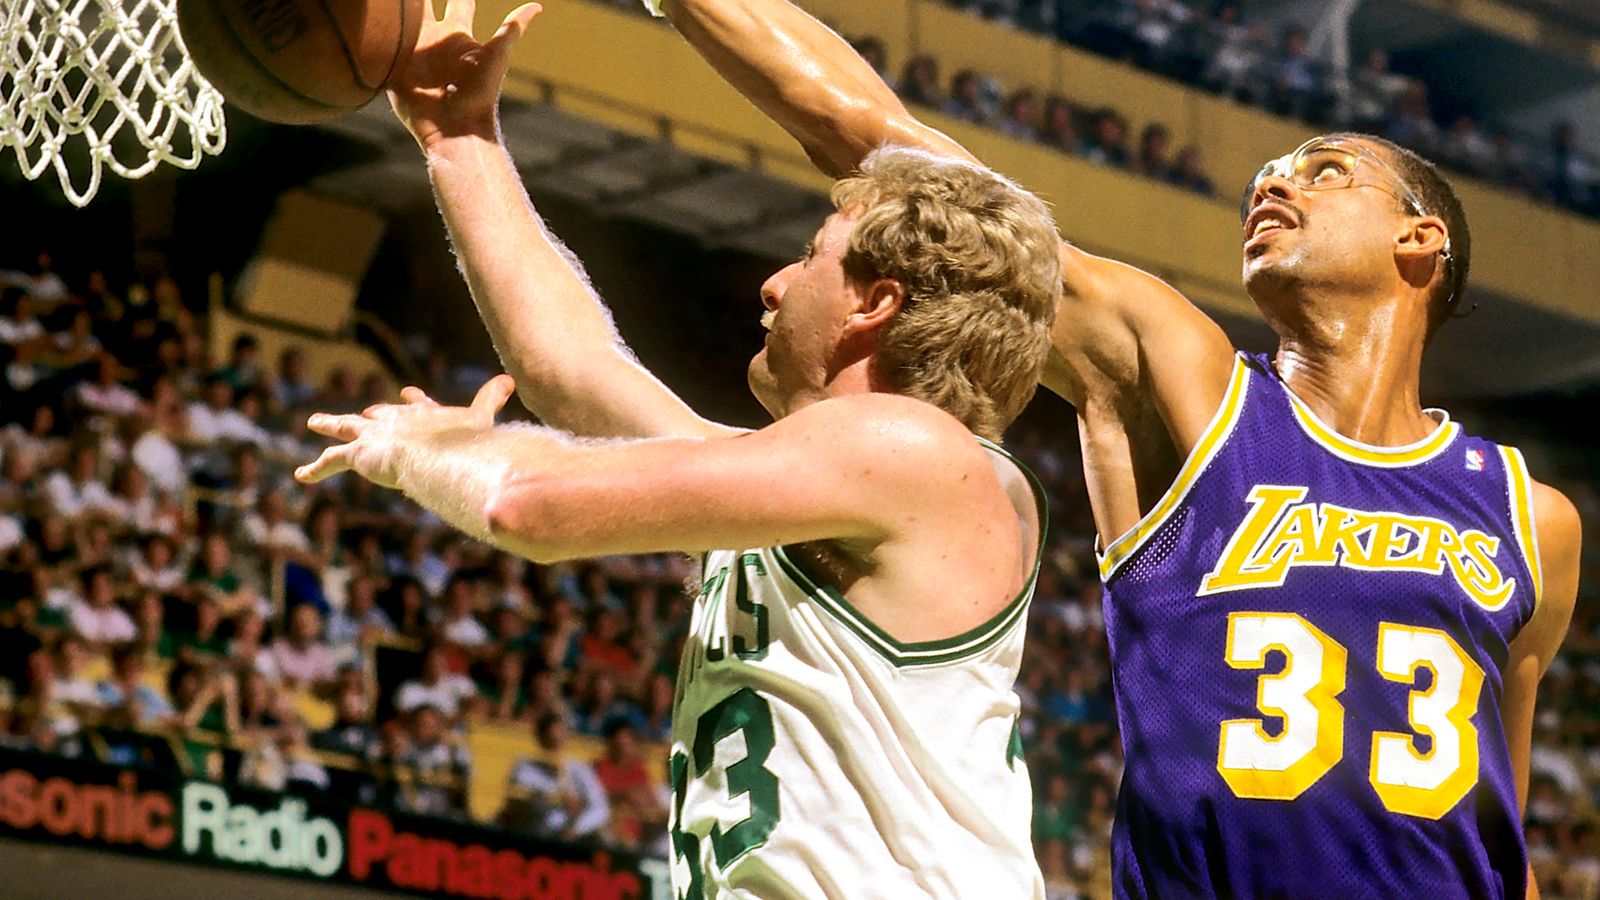 Most iconic NBA numbers: #33 – Larry Bird, Kareem Abdul-Jabbar